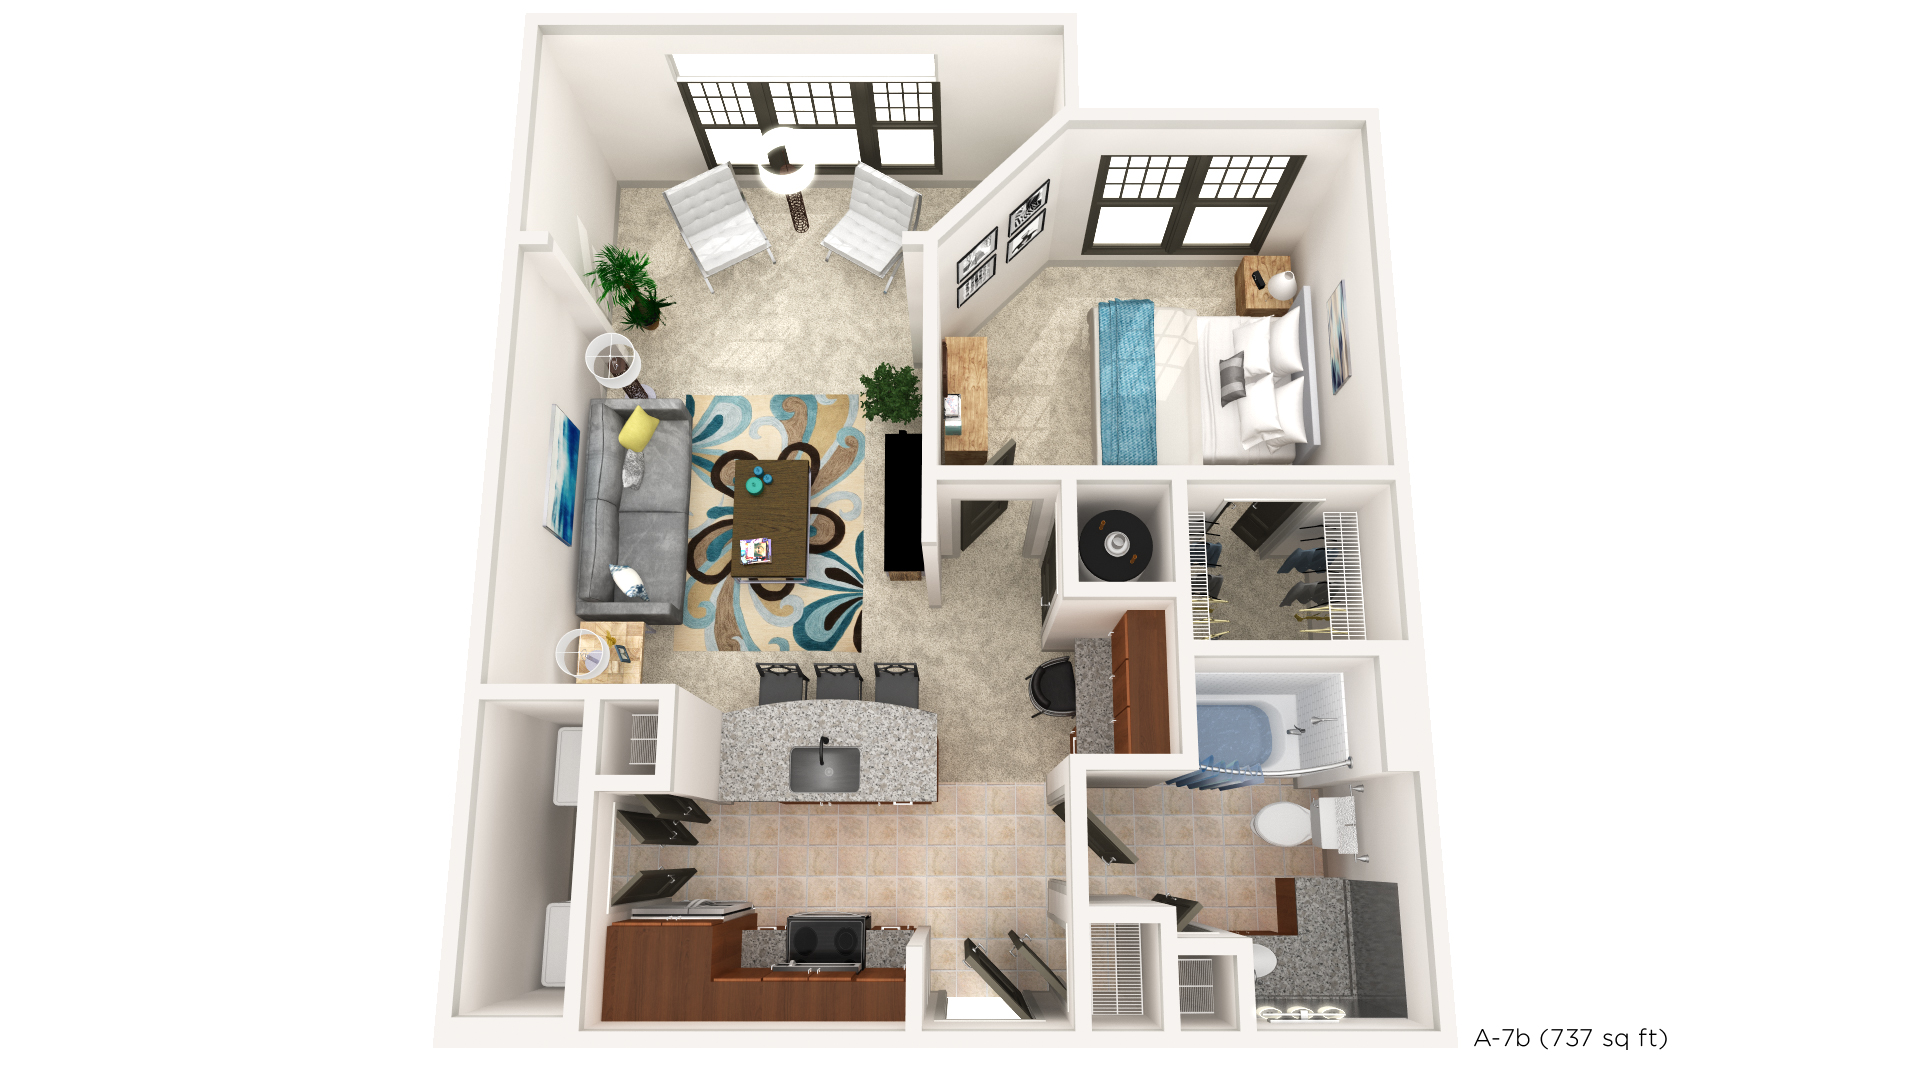 Brookleigh Flats Luxury Apartment Homes - Floorplan - A-7B